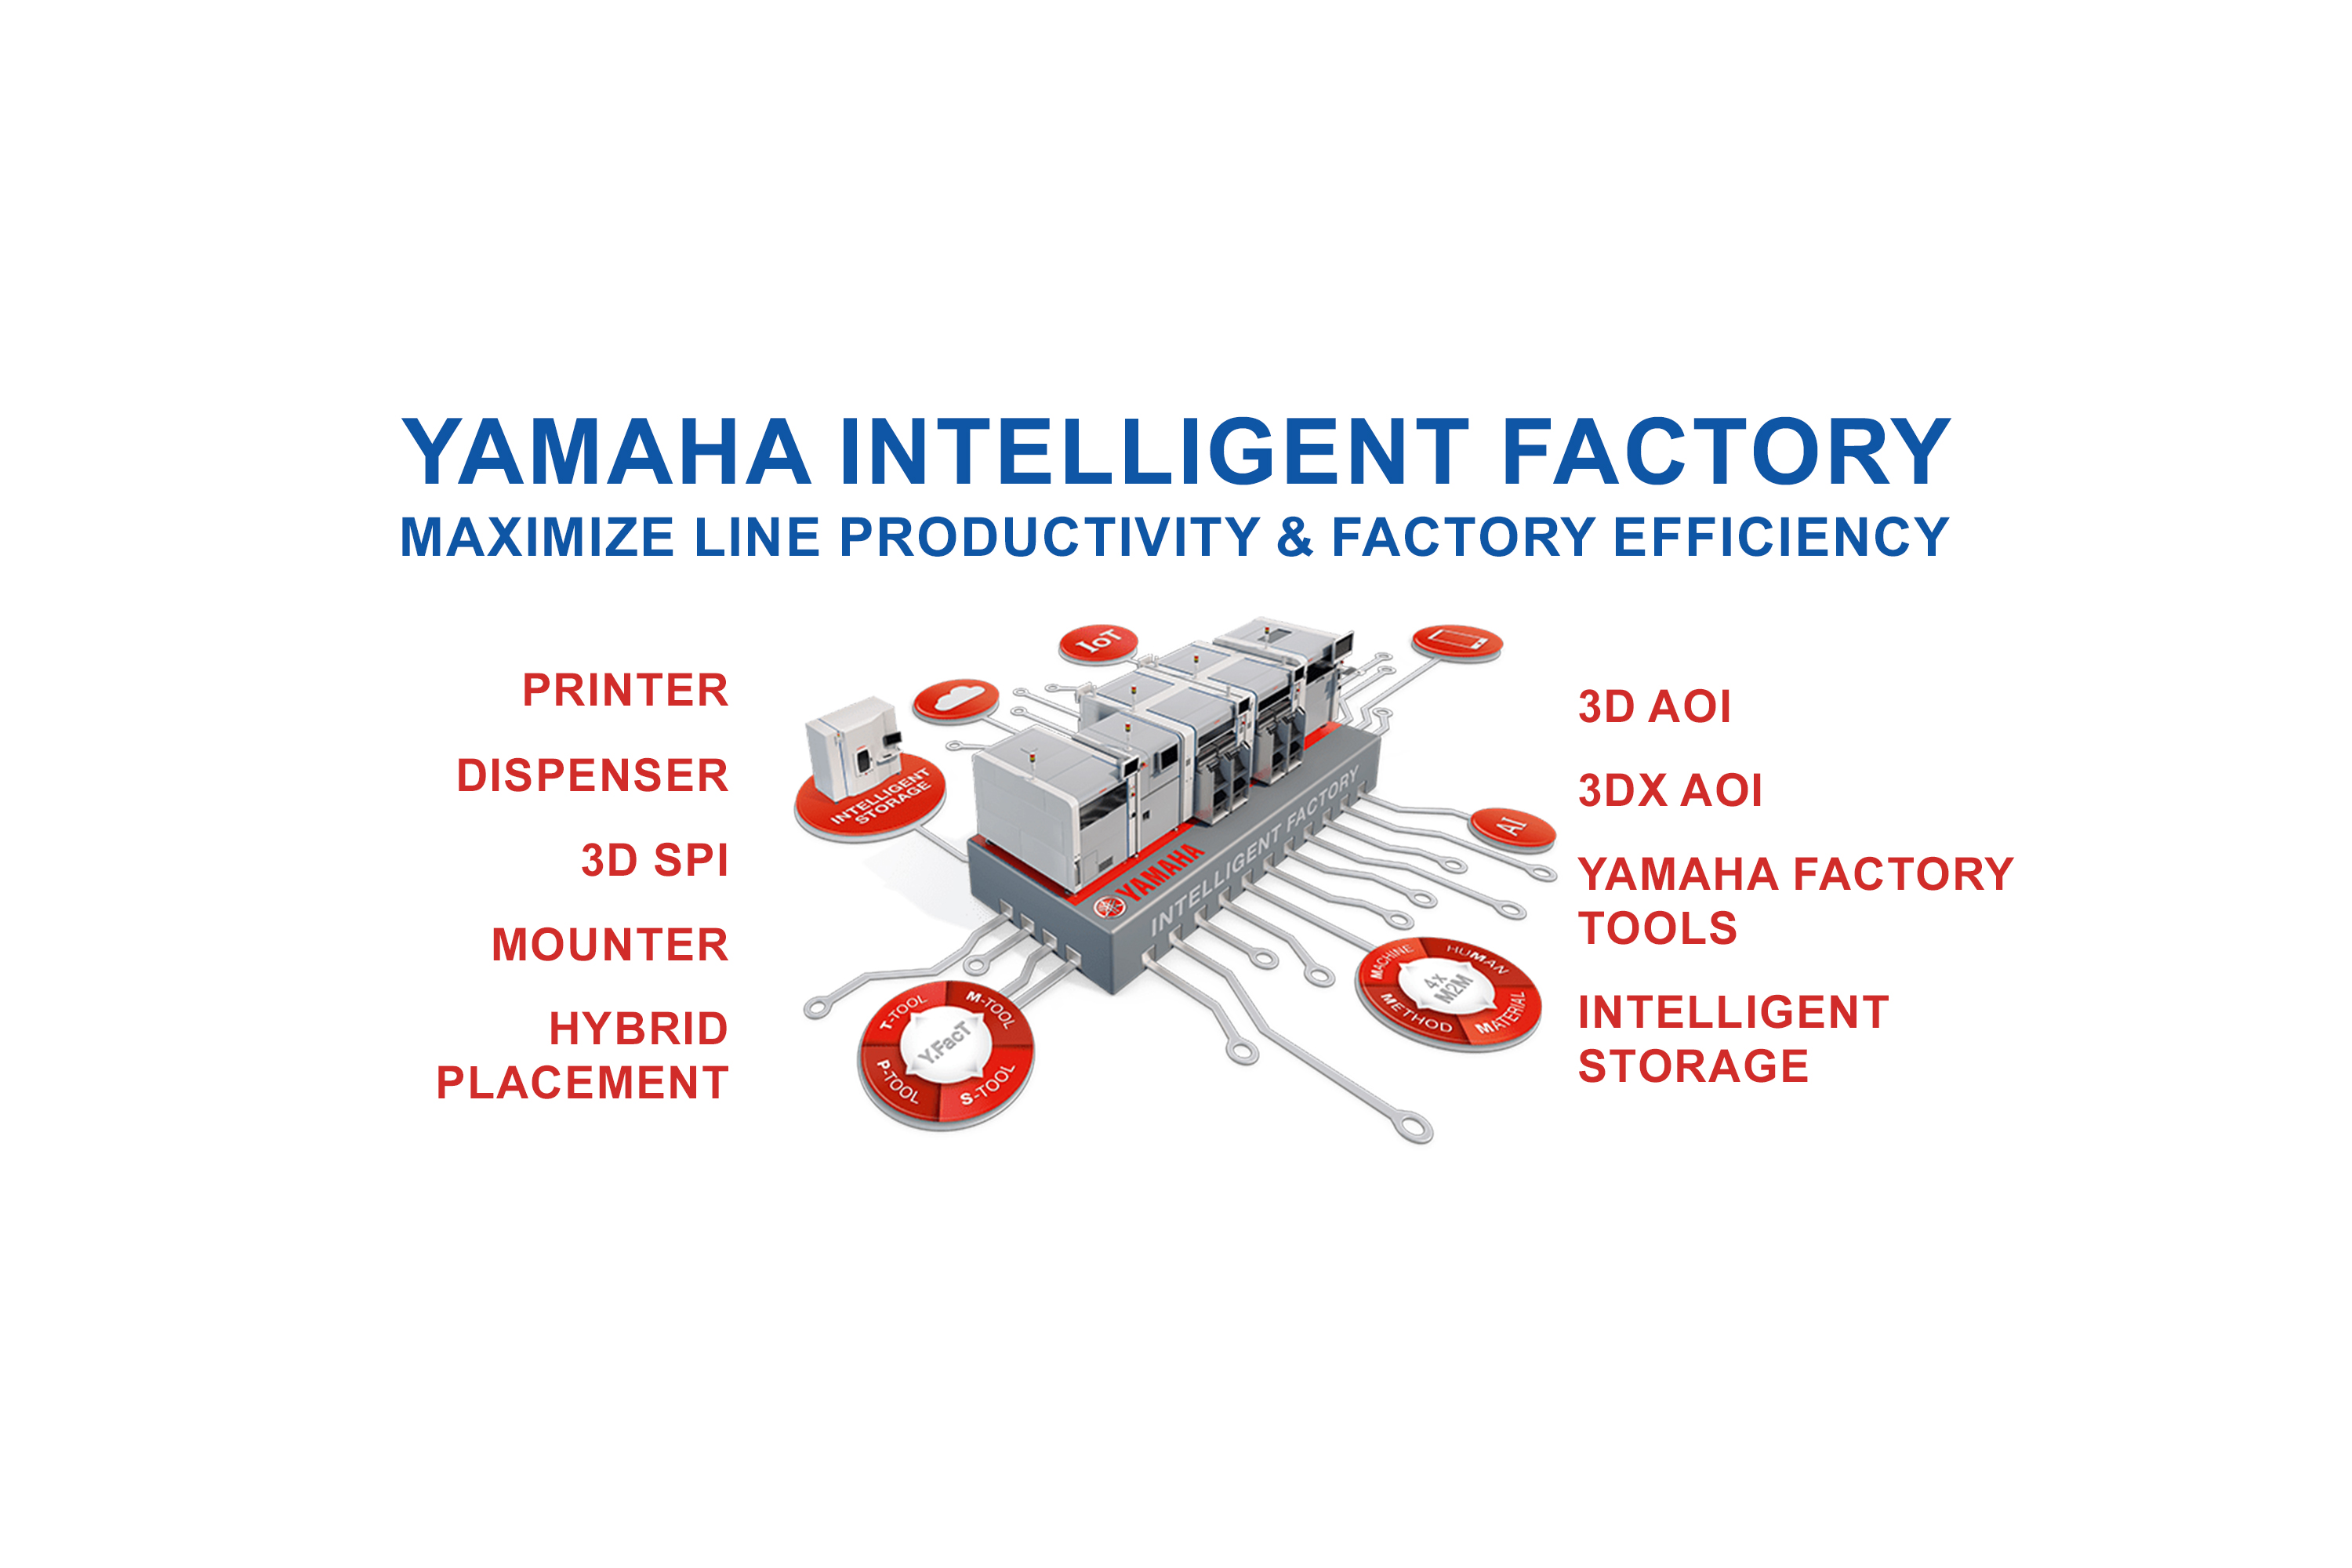 Yamaha intelligent factory